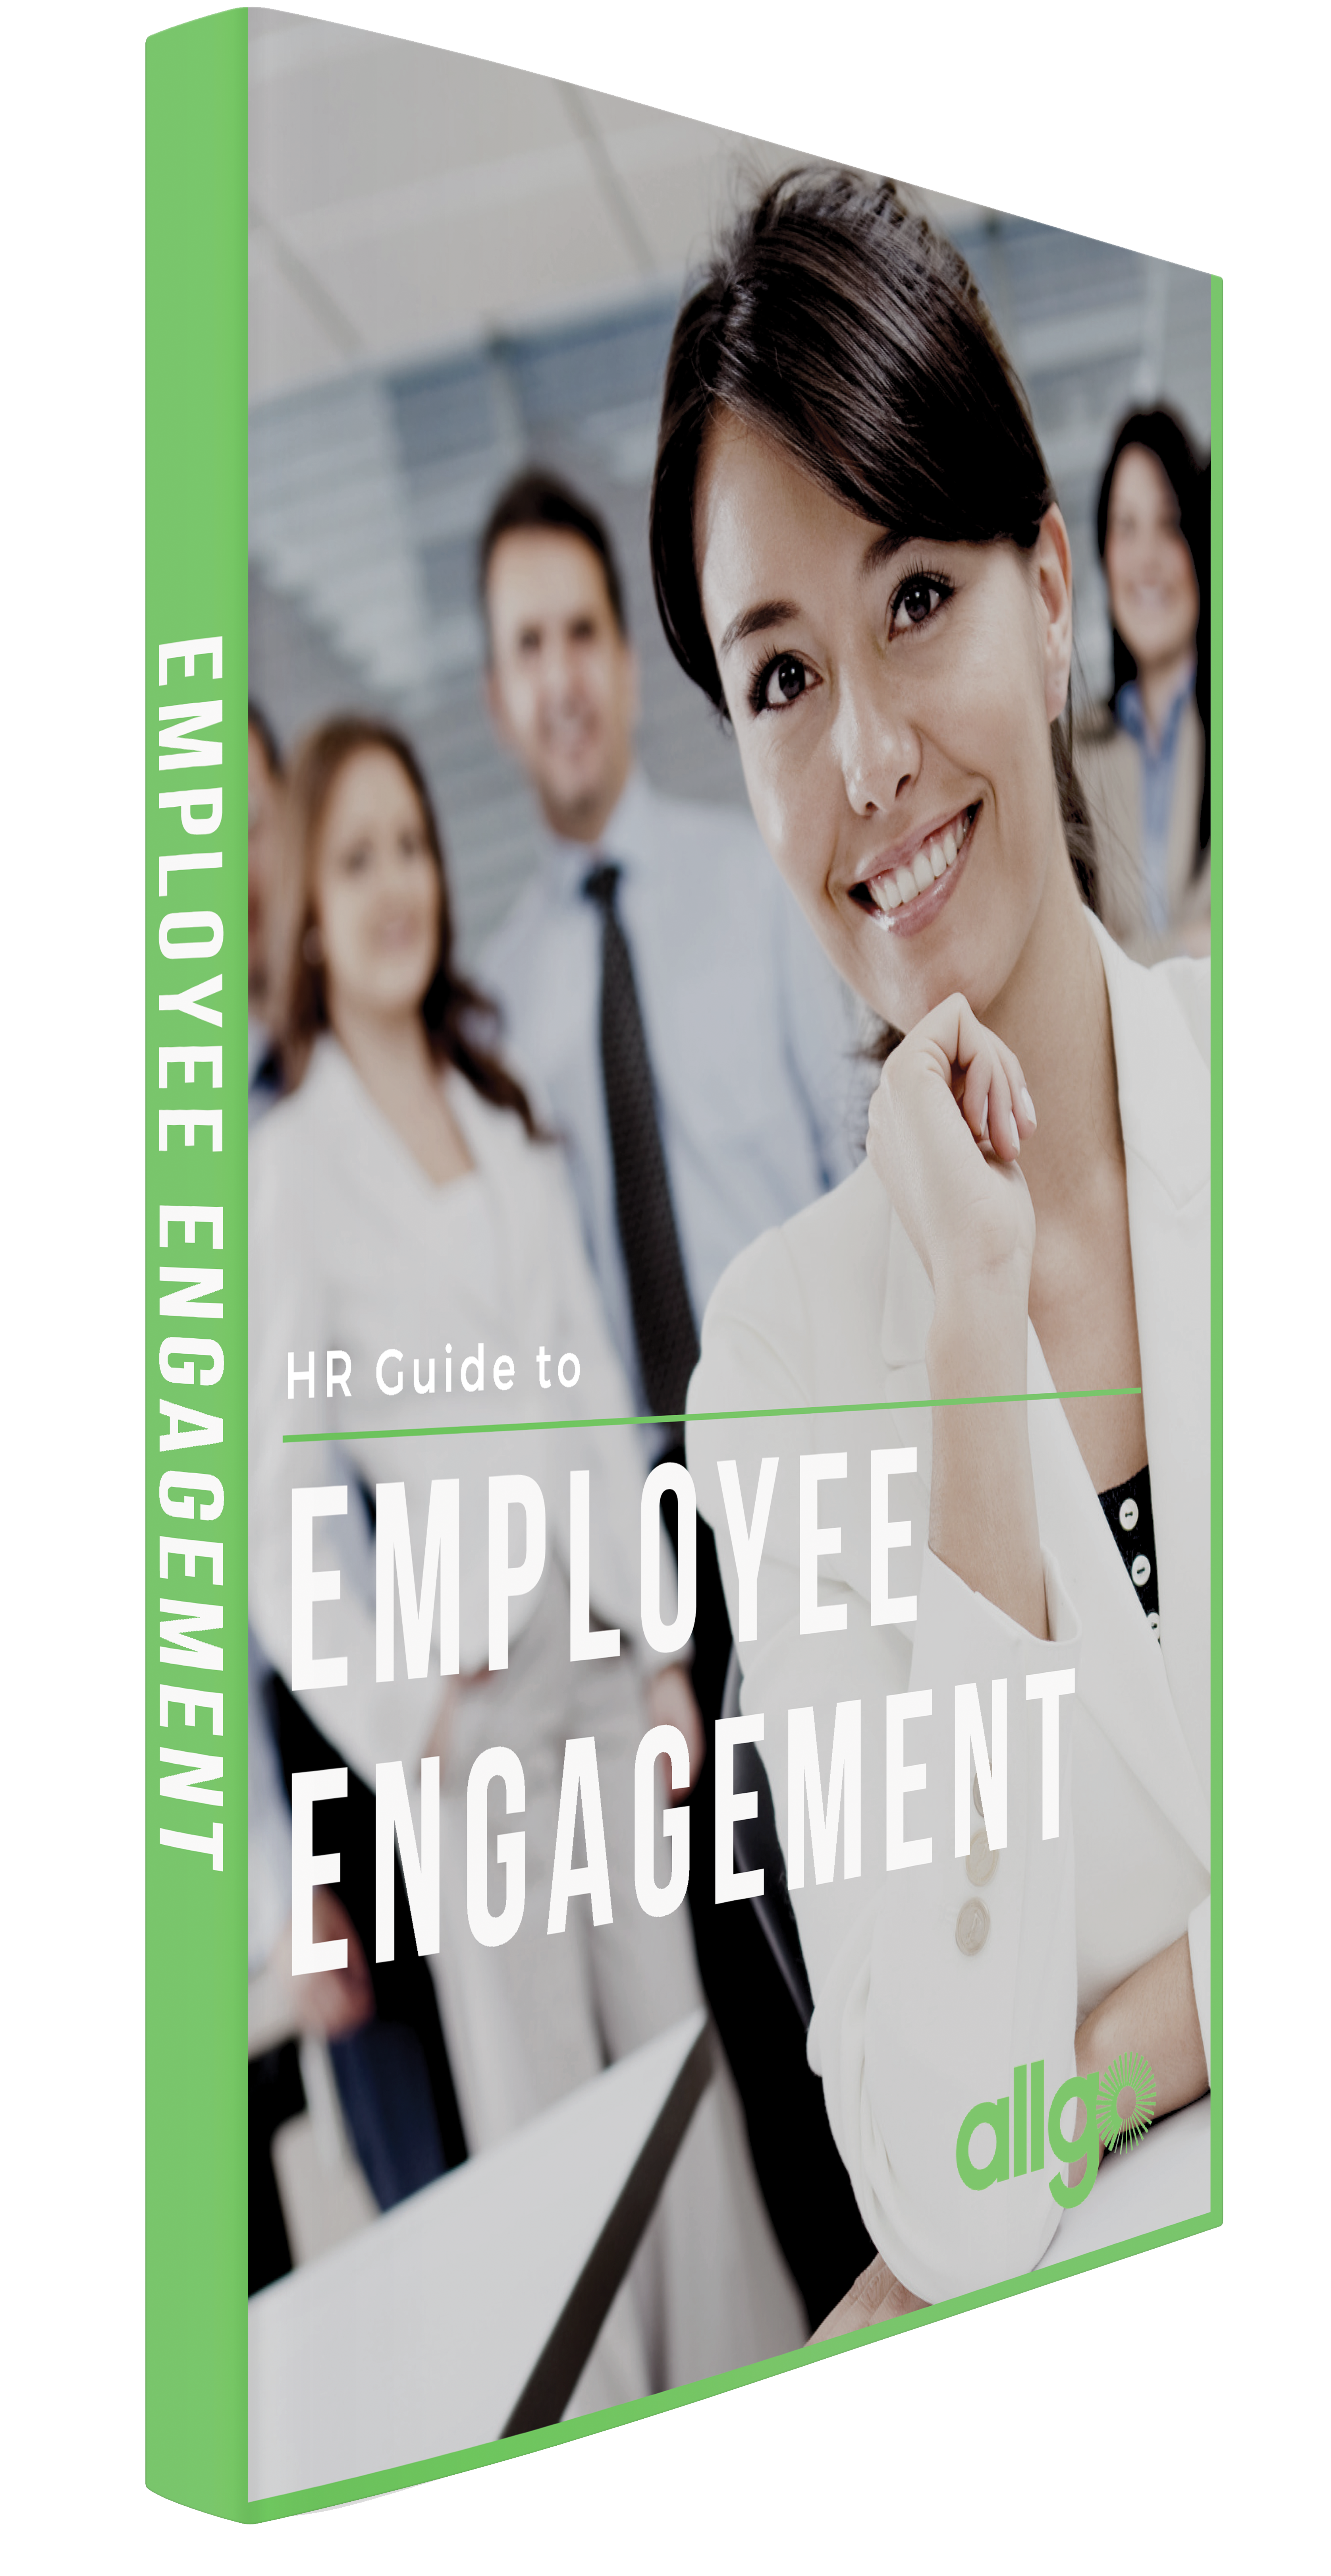 eBook: Employee Engagement